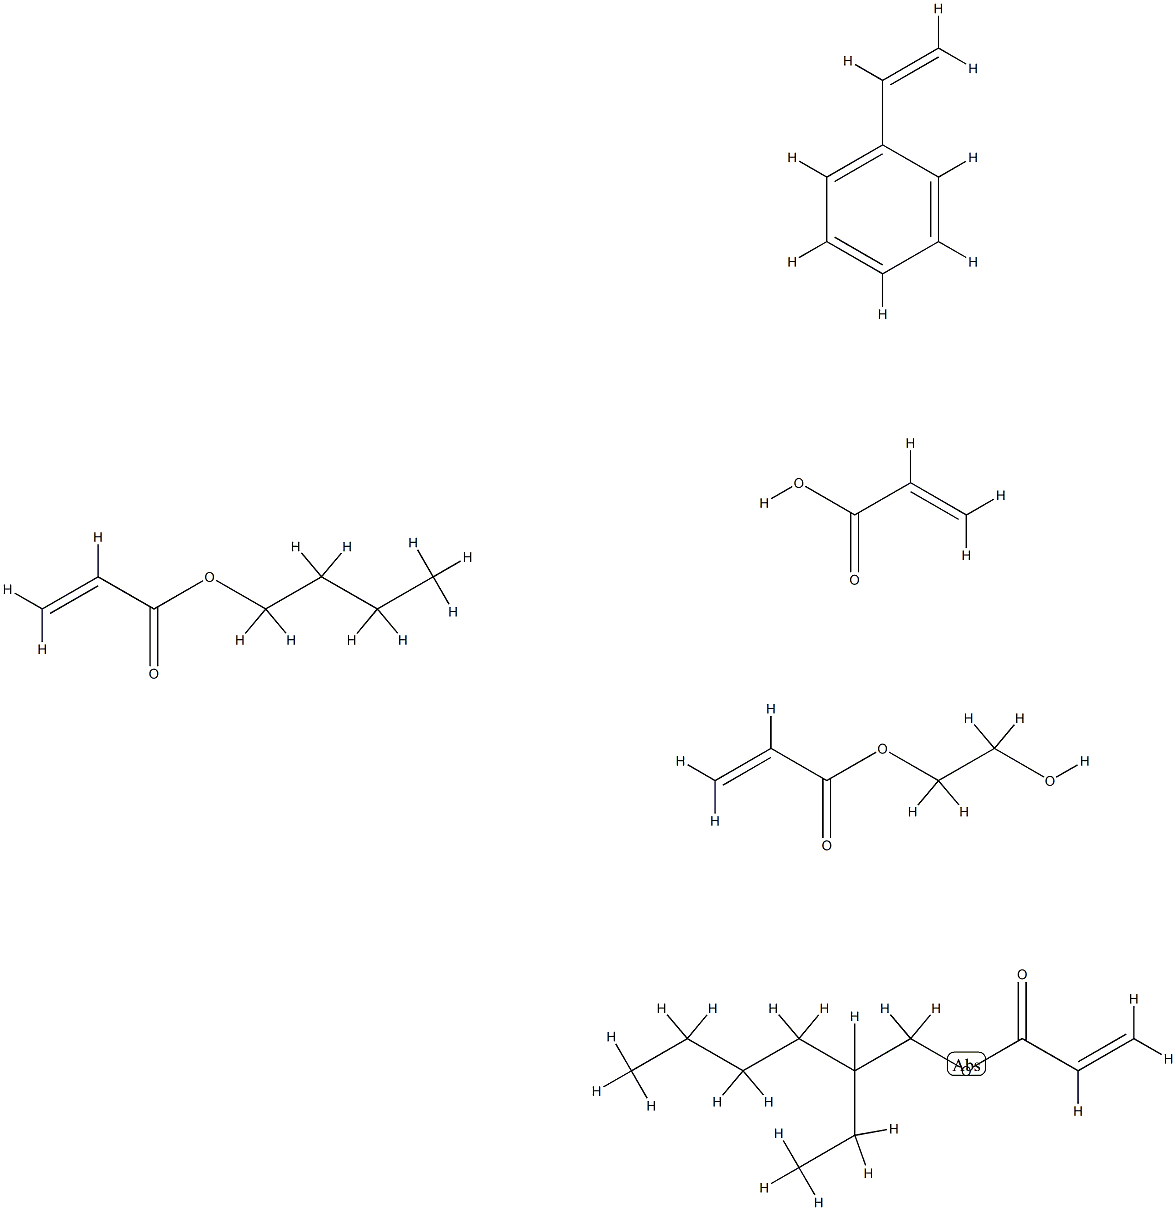 68527-36-6 2-Propenoic acid, polymer with butyl 2-propenoate, ethenylbenzene, 2-ethylhexyl 2-propenoate and 2-hydroxyethyl 2-propenoate